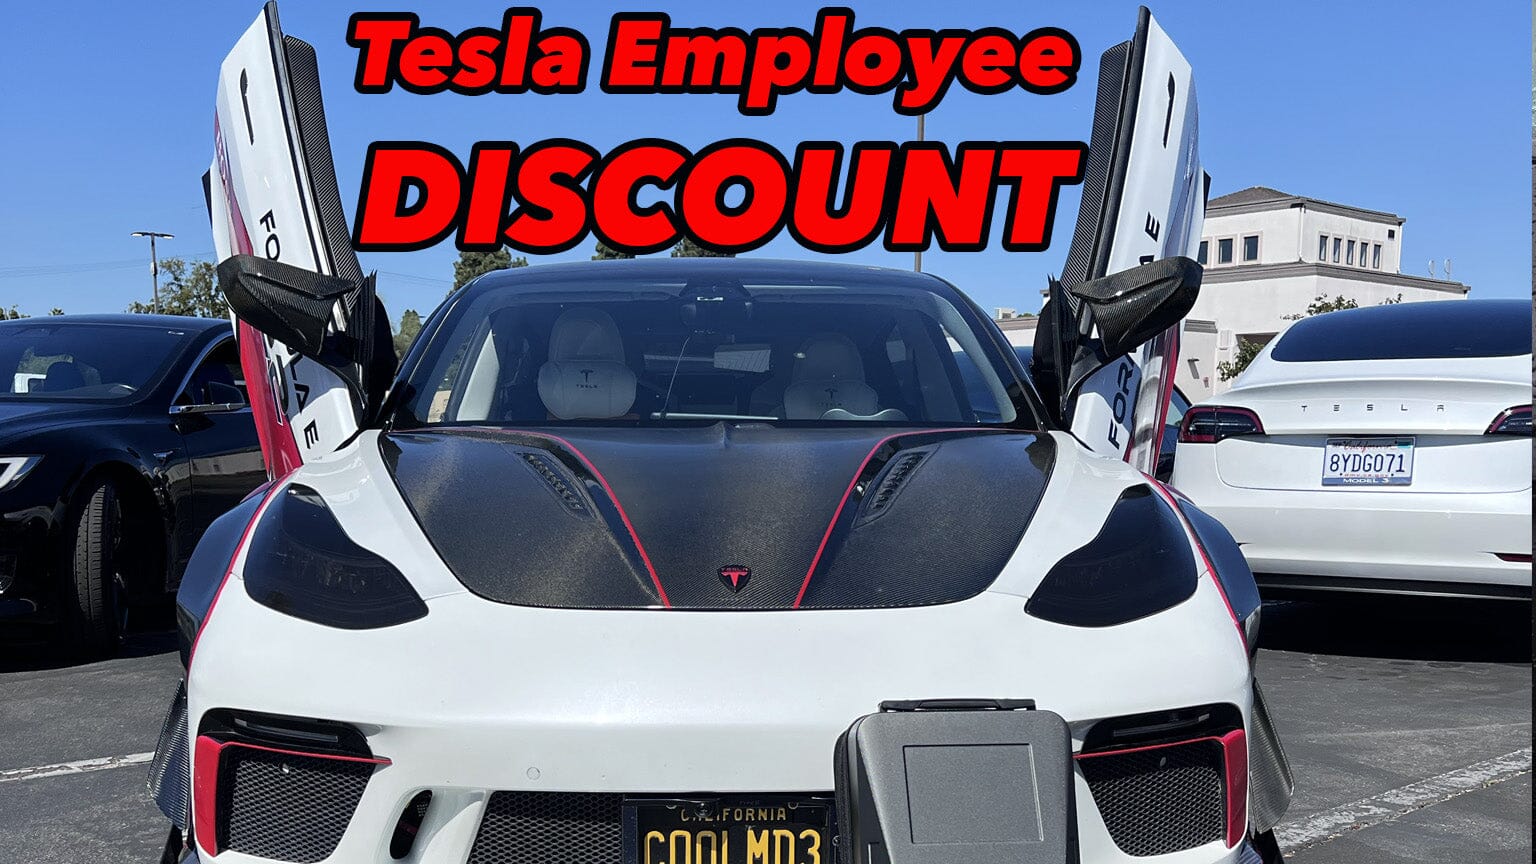 Tesla Employee Discount: What to expect as a Tesla employee.